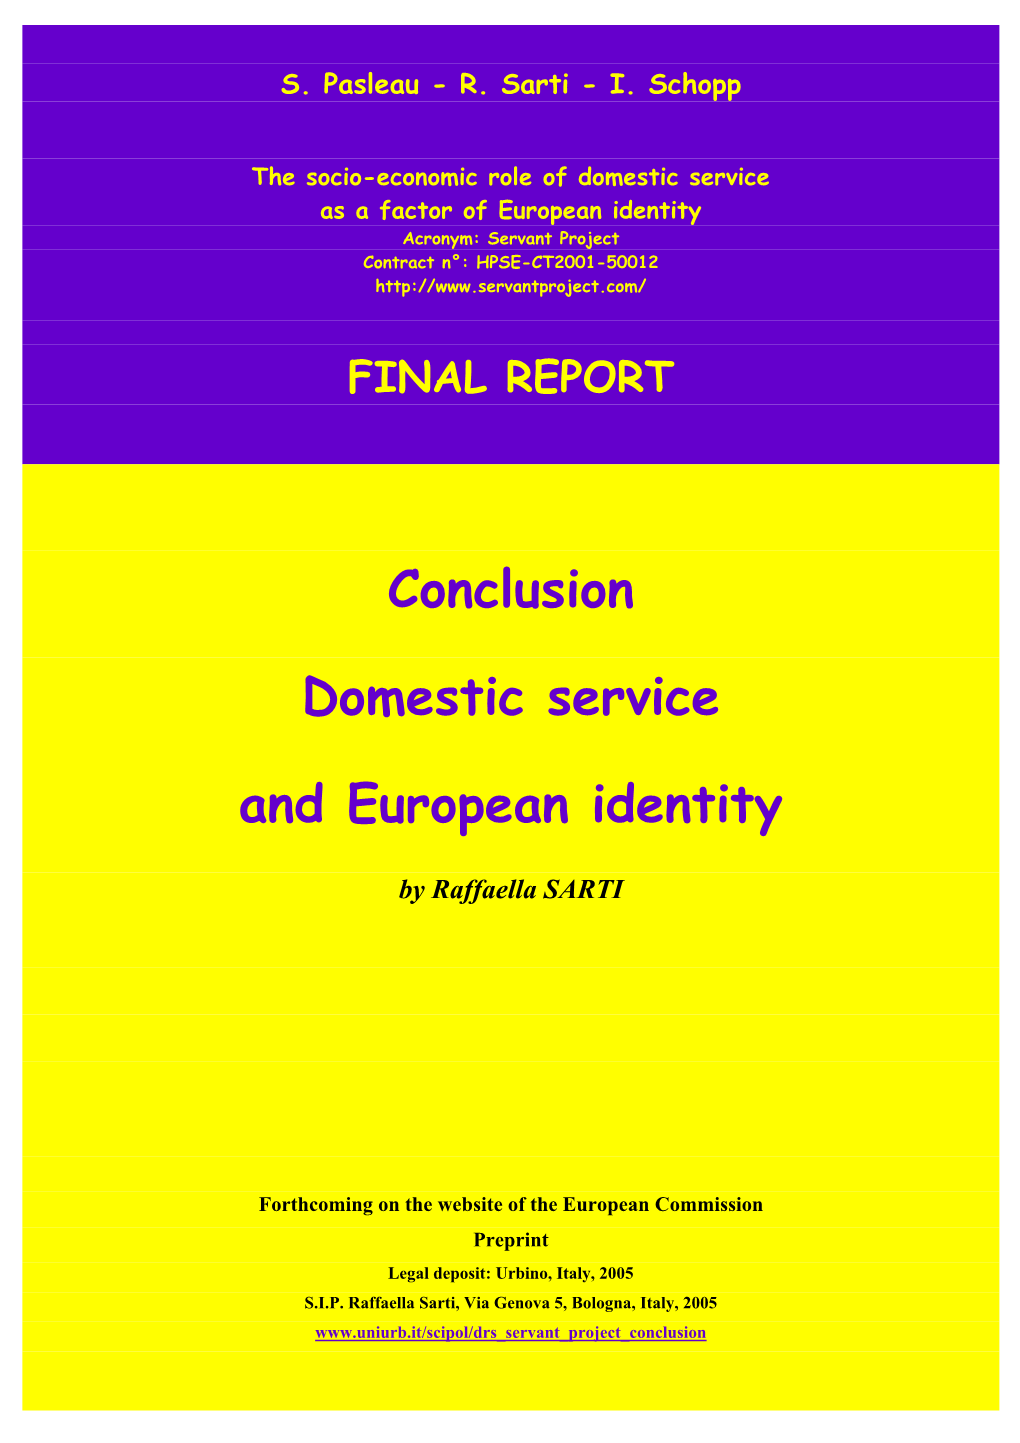 Conclusion Domestic Service and European Identity